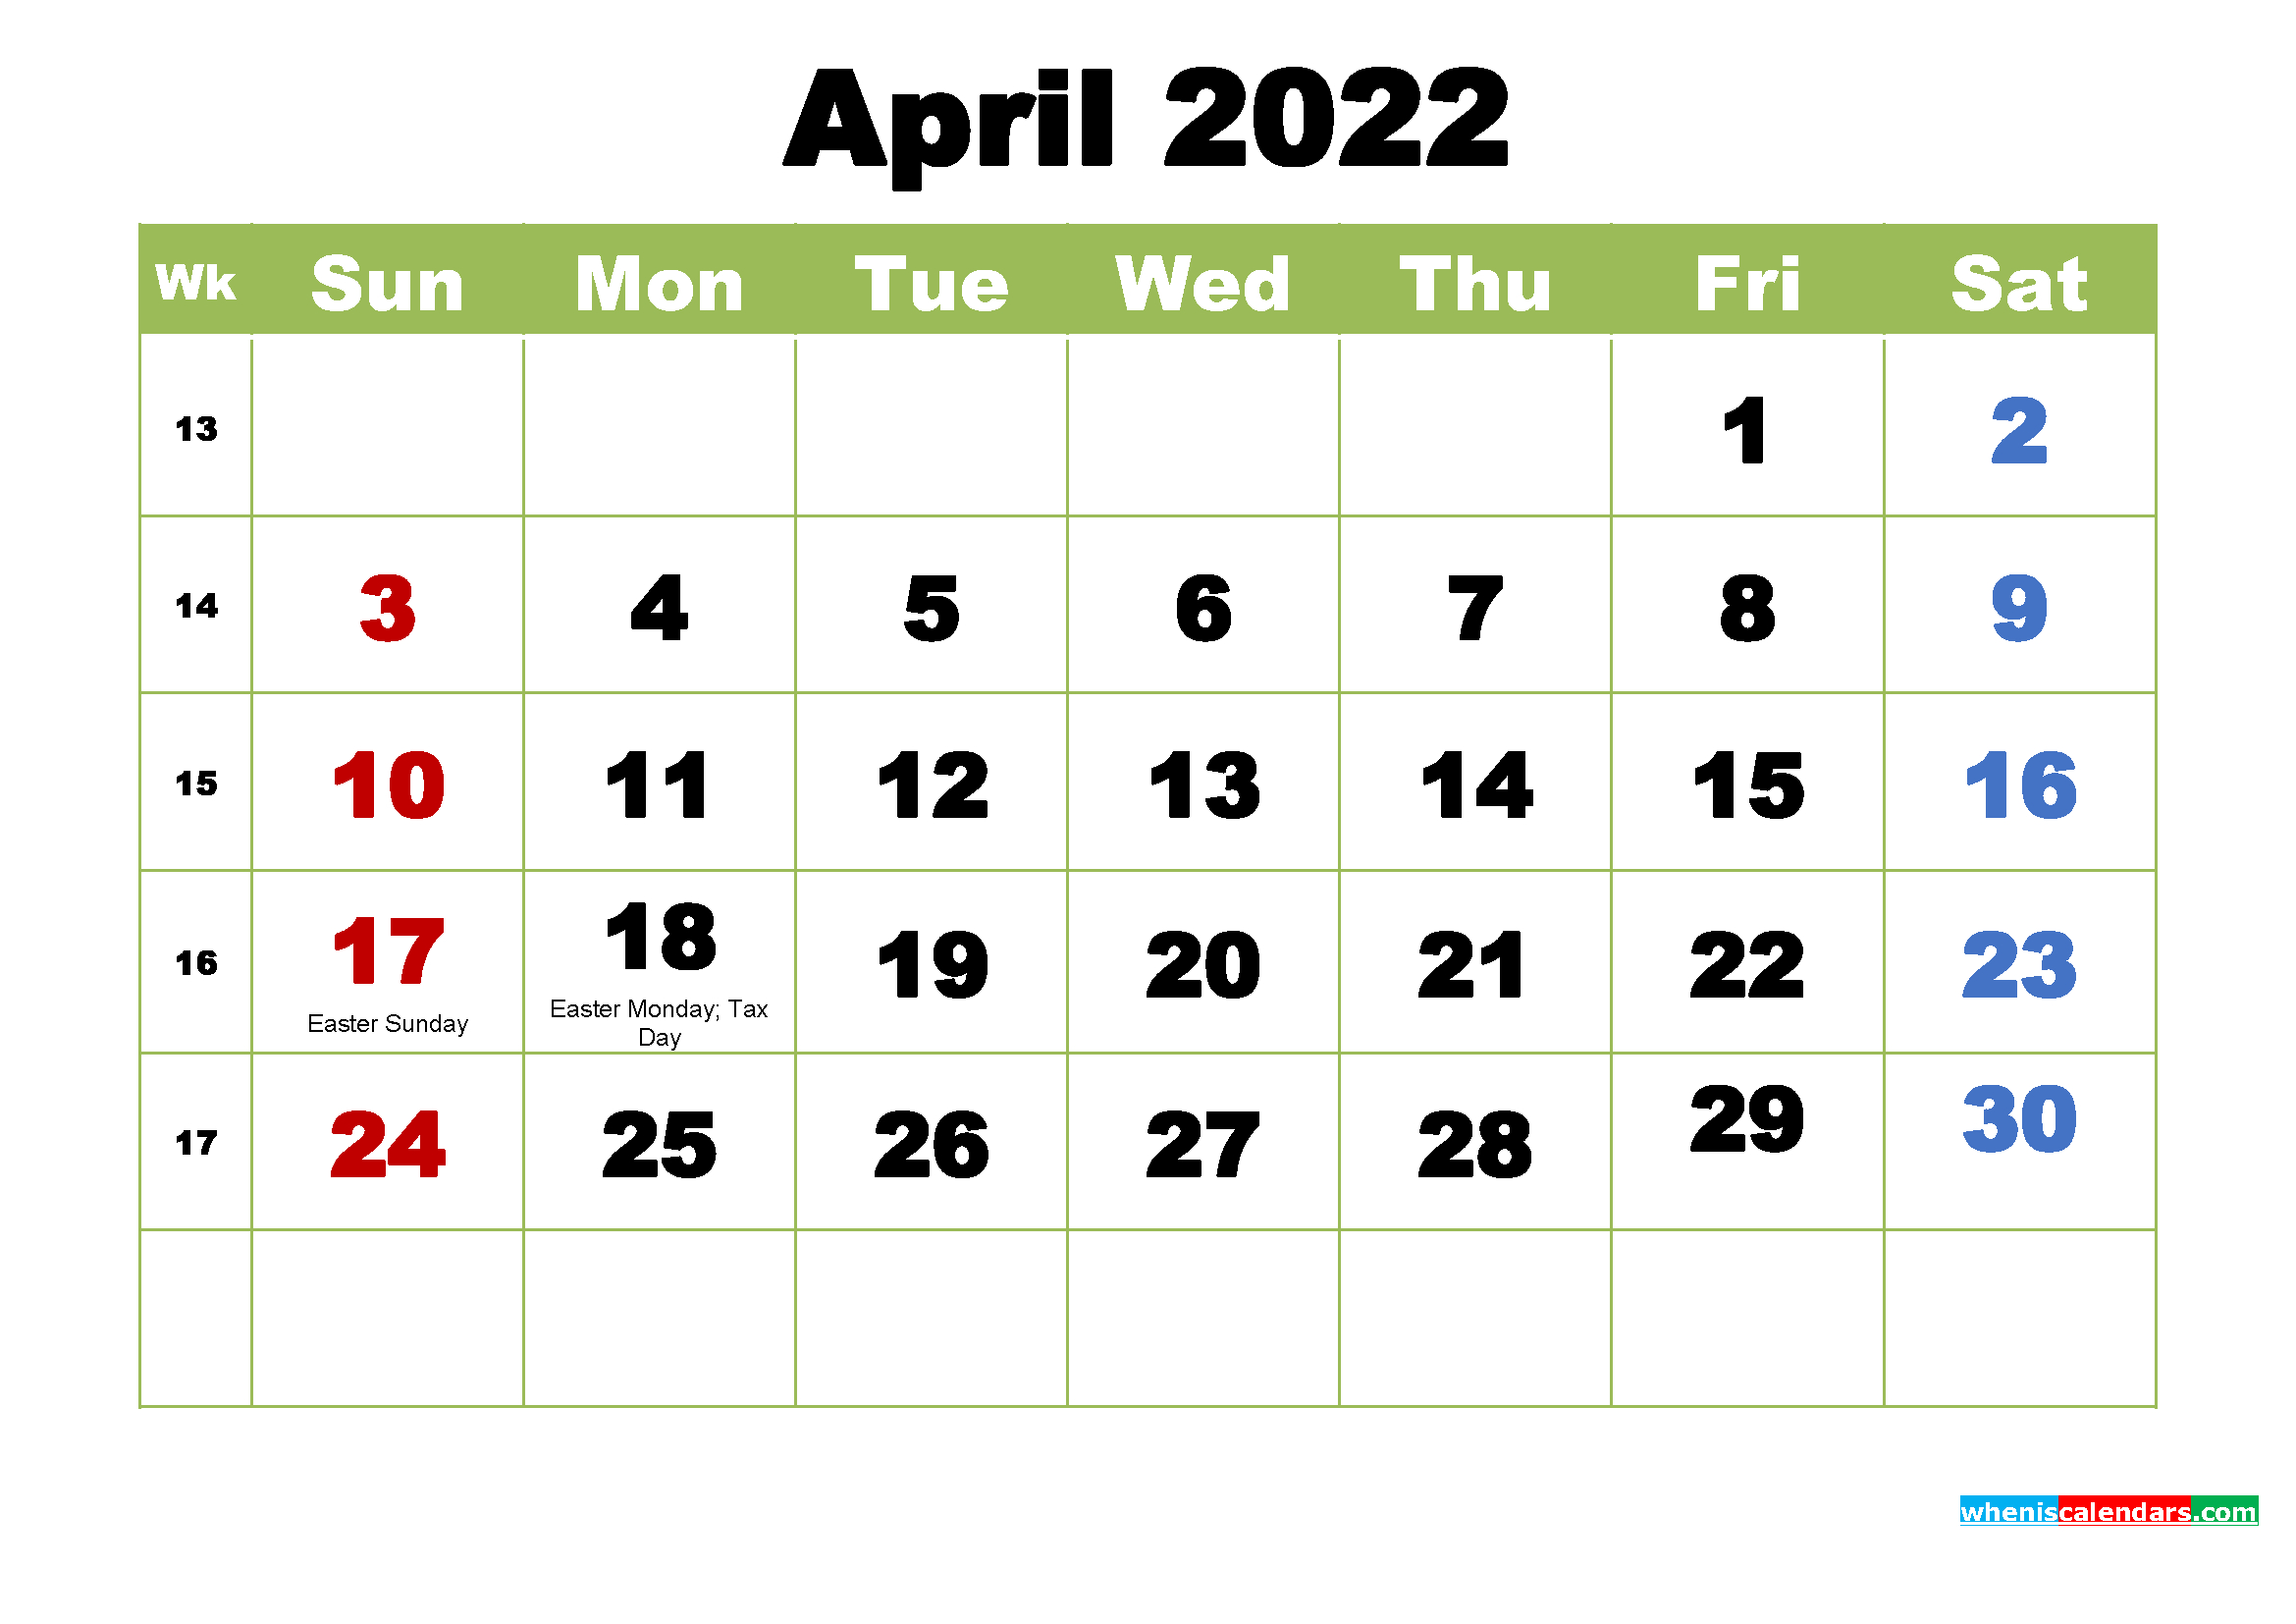 April 2022 Calendar - Allcalendar